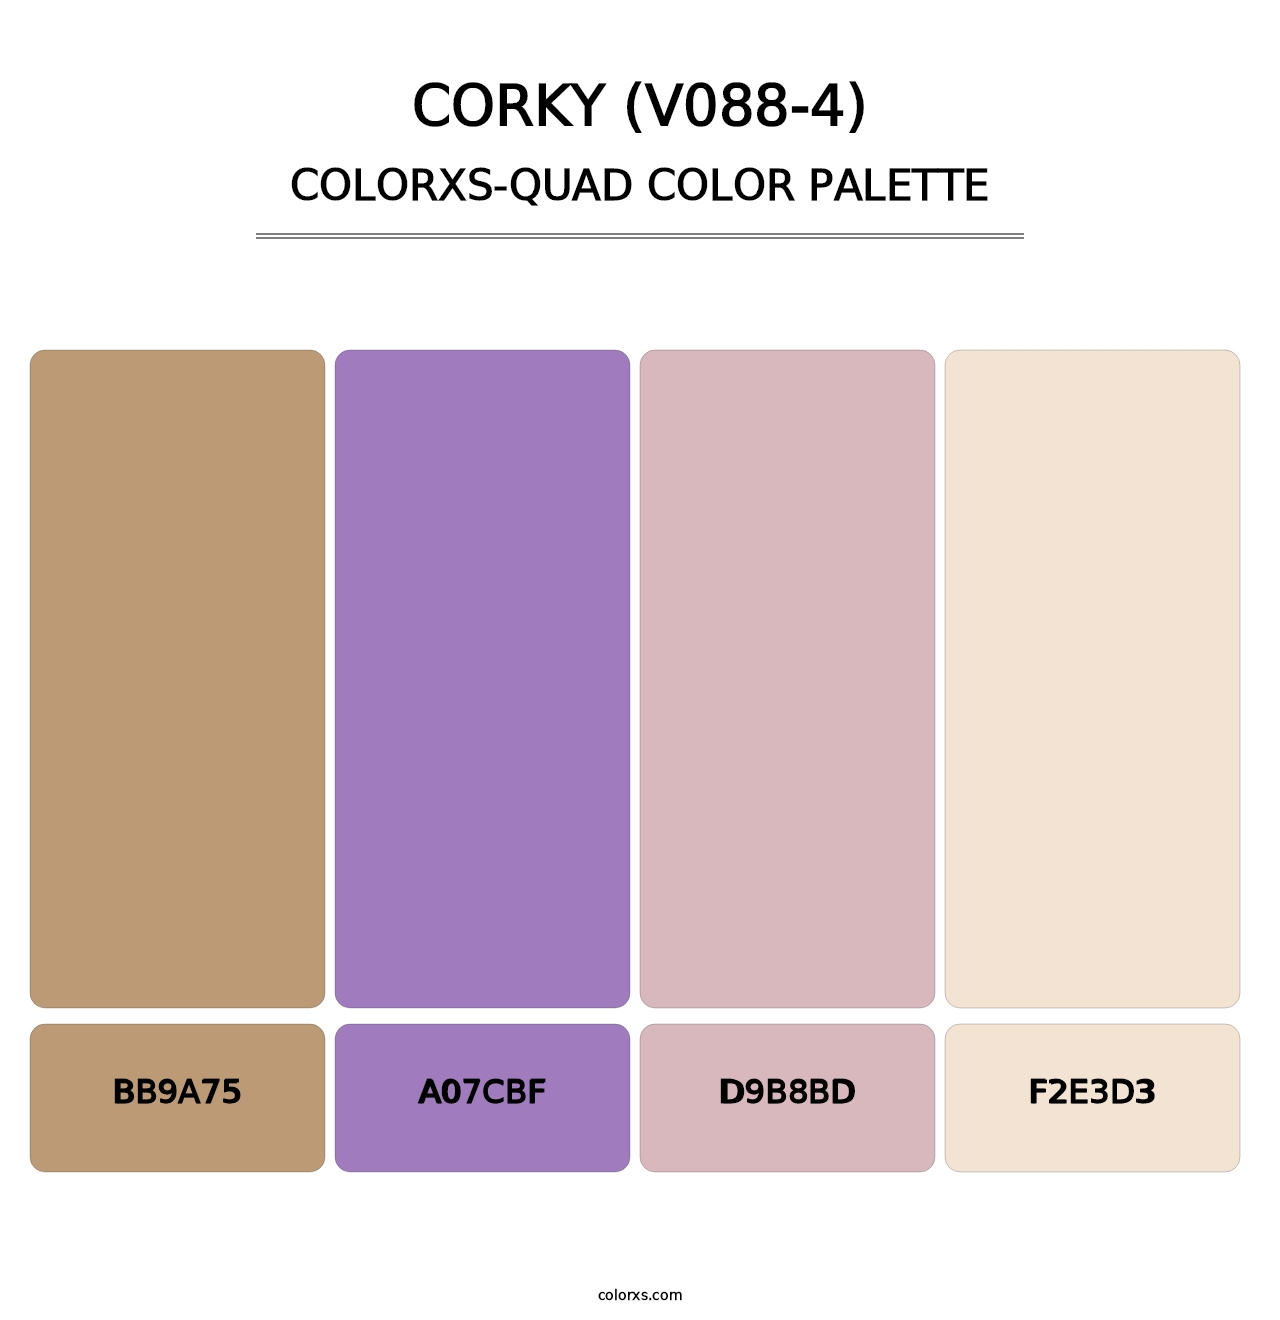 Corky (V088-4) - Colorxs Quad Palette